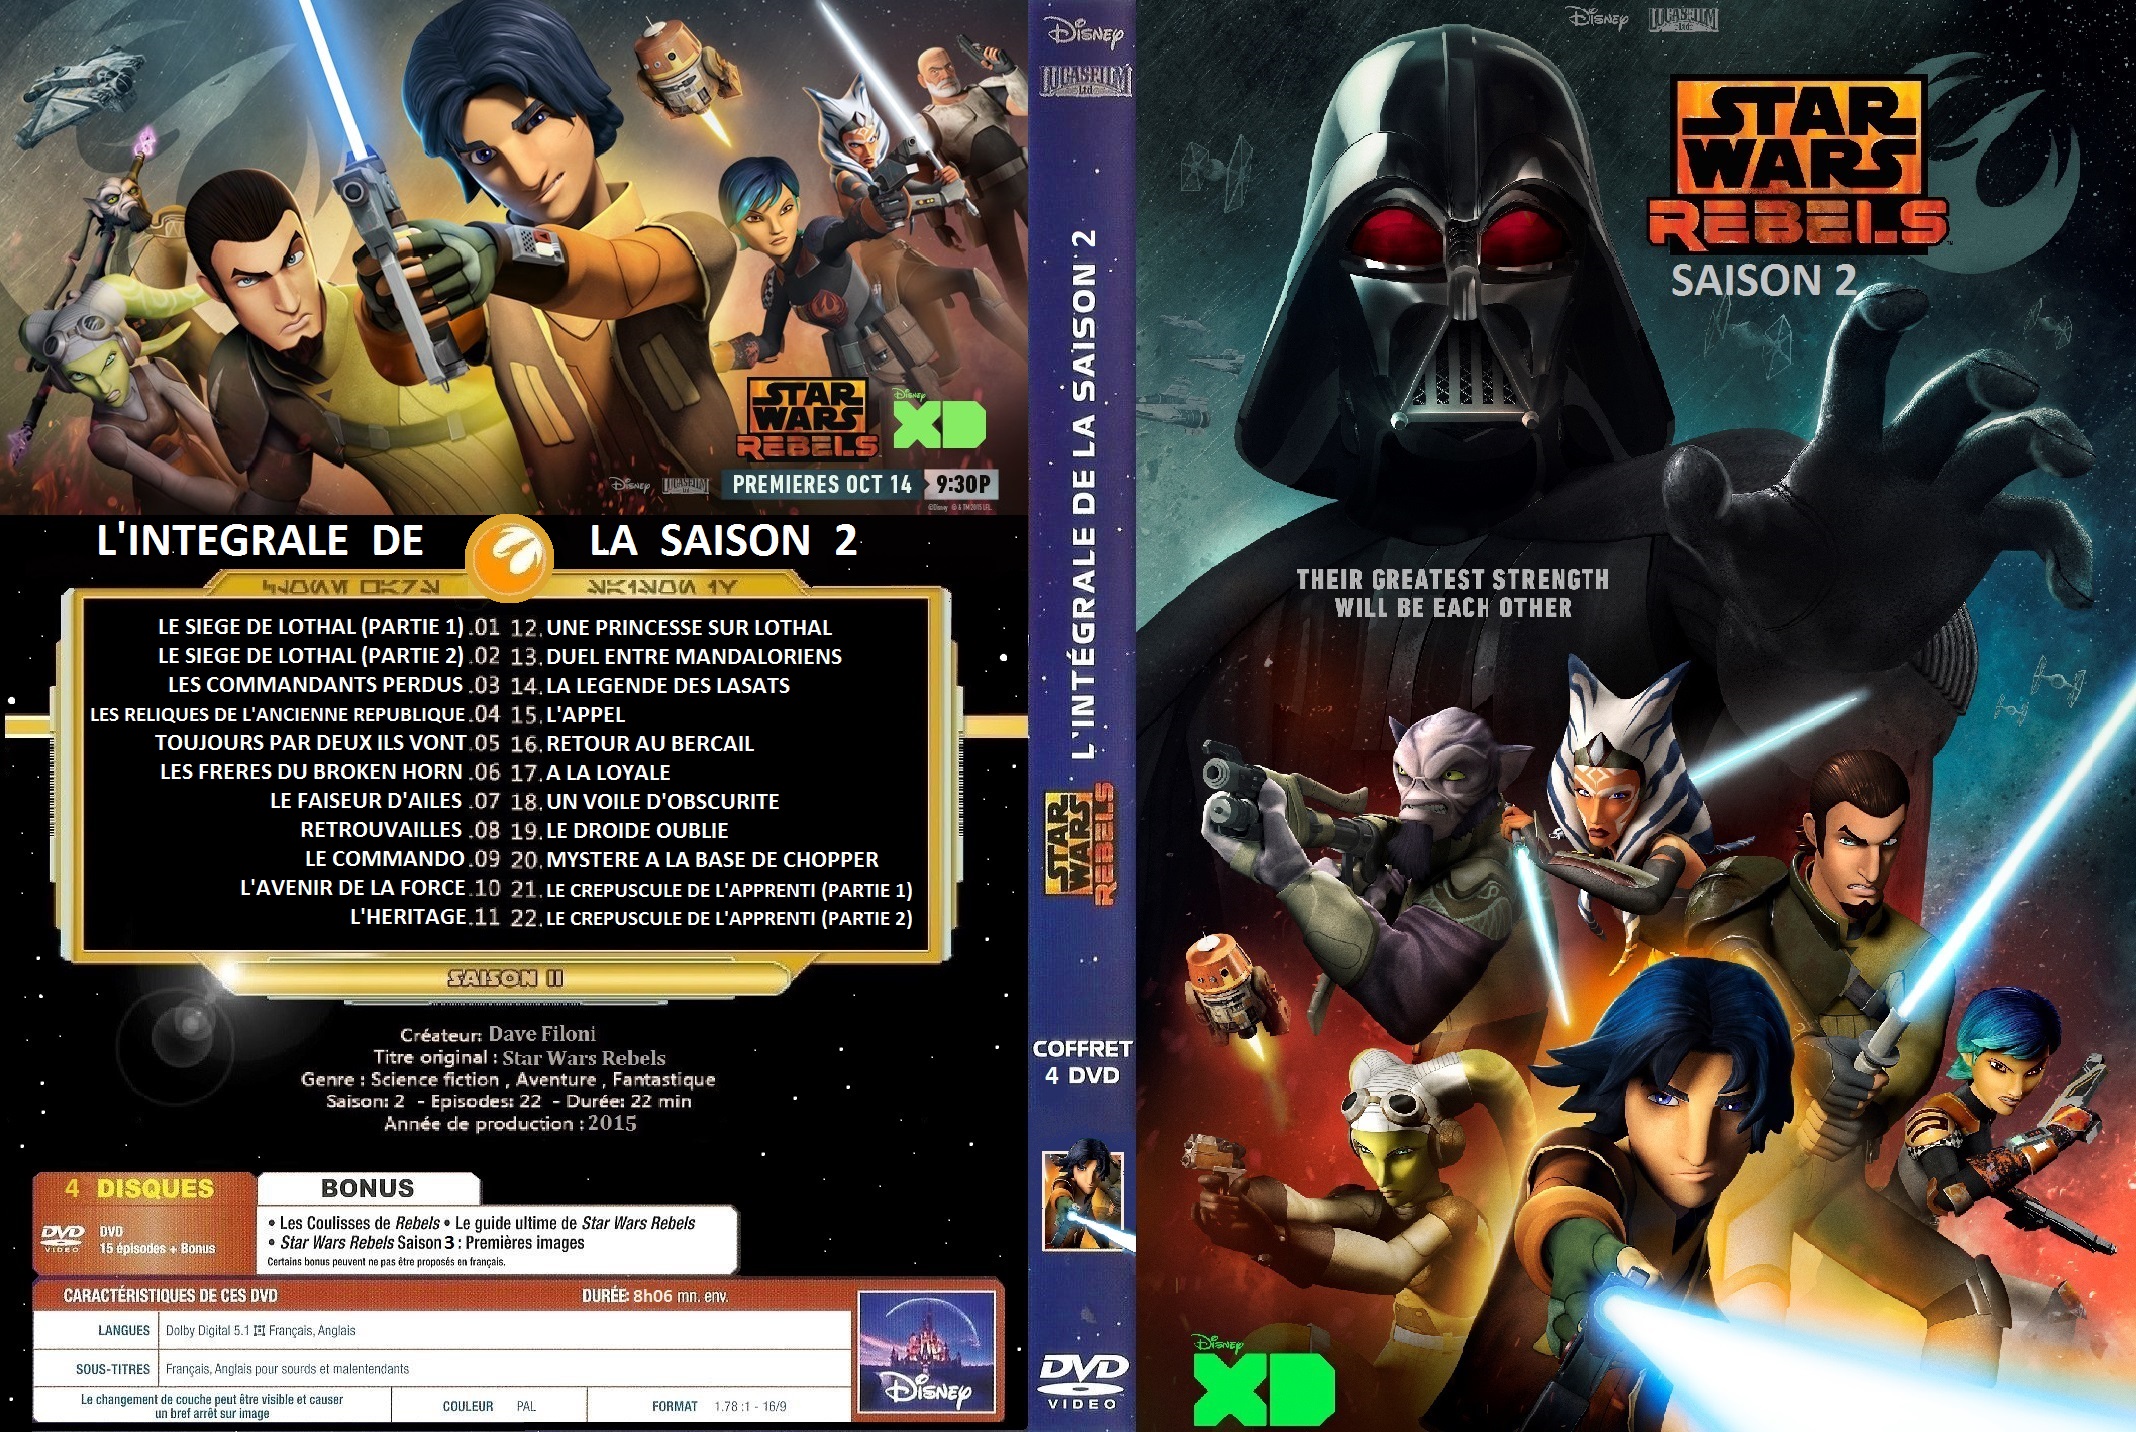 Jaquette DVD Star Wars Rebels saison 2 custom